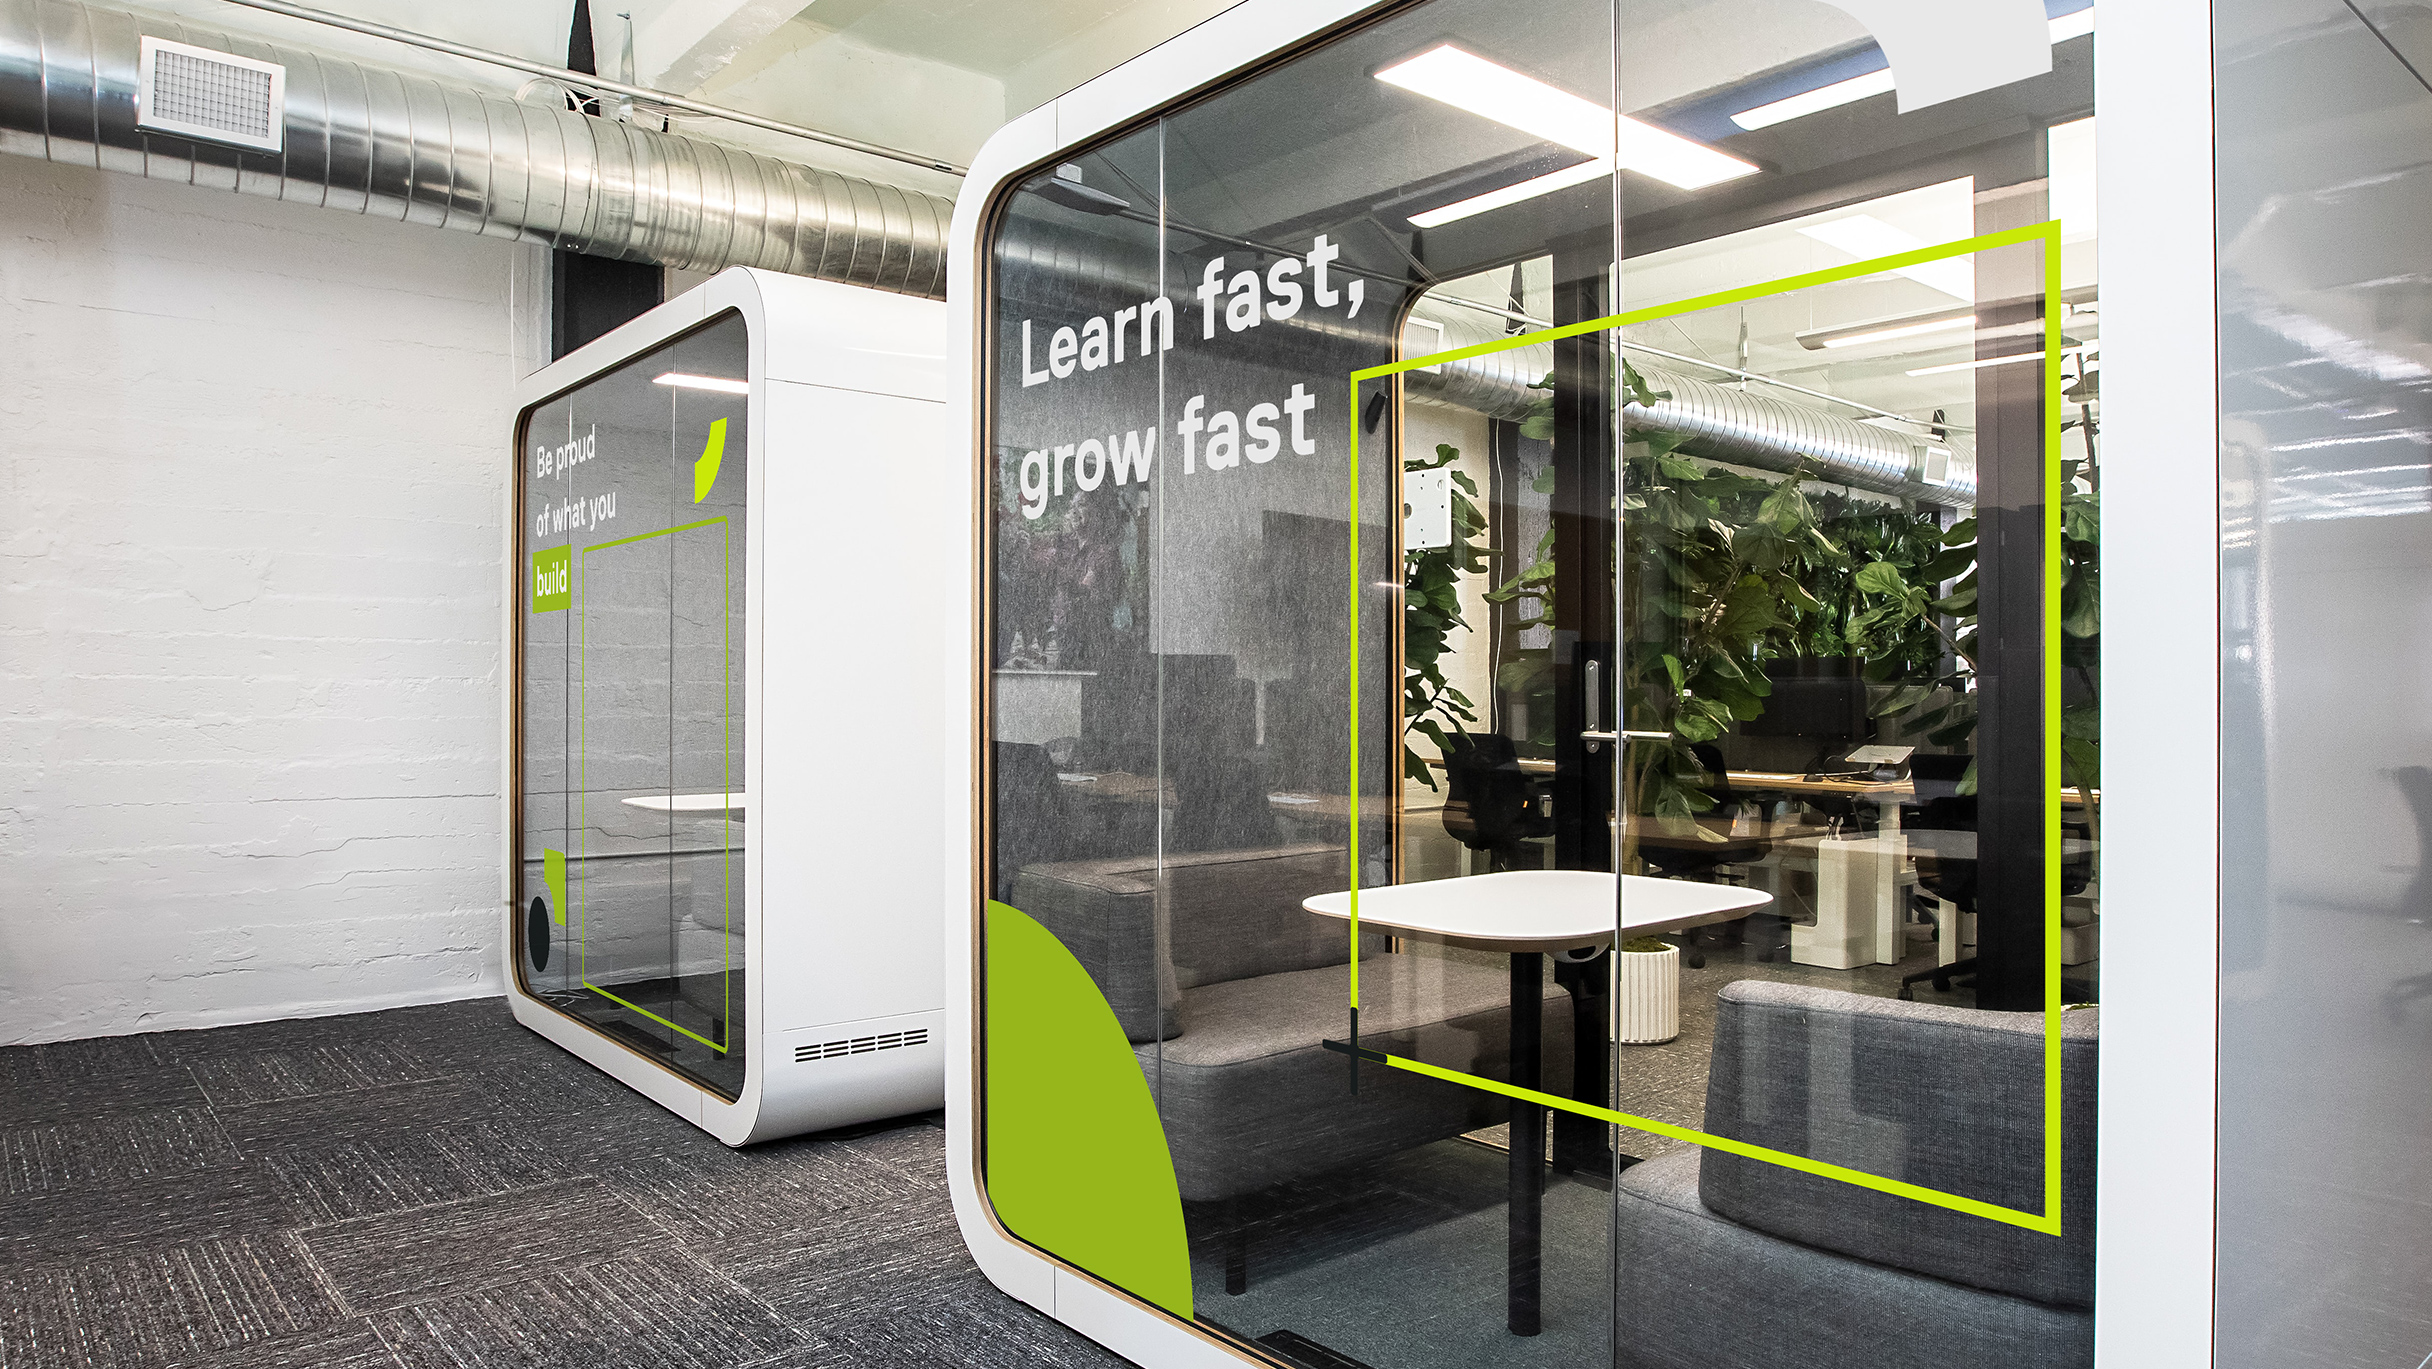 Capmo Telefonboxen in Büro beklebt mit Schriftzug "Learn fast, grow fast"